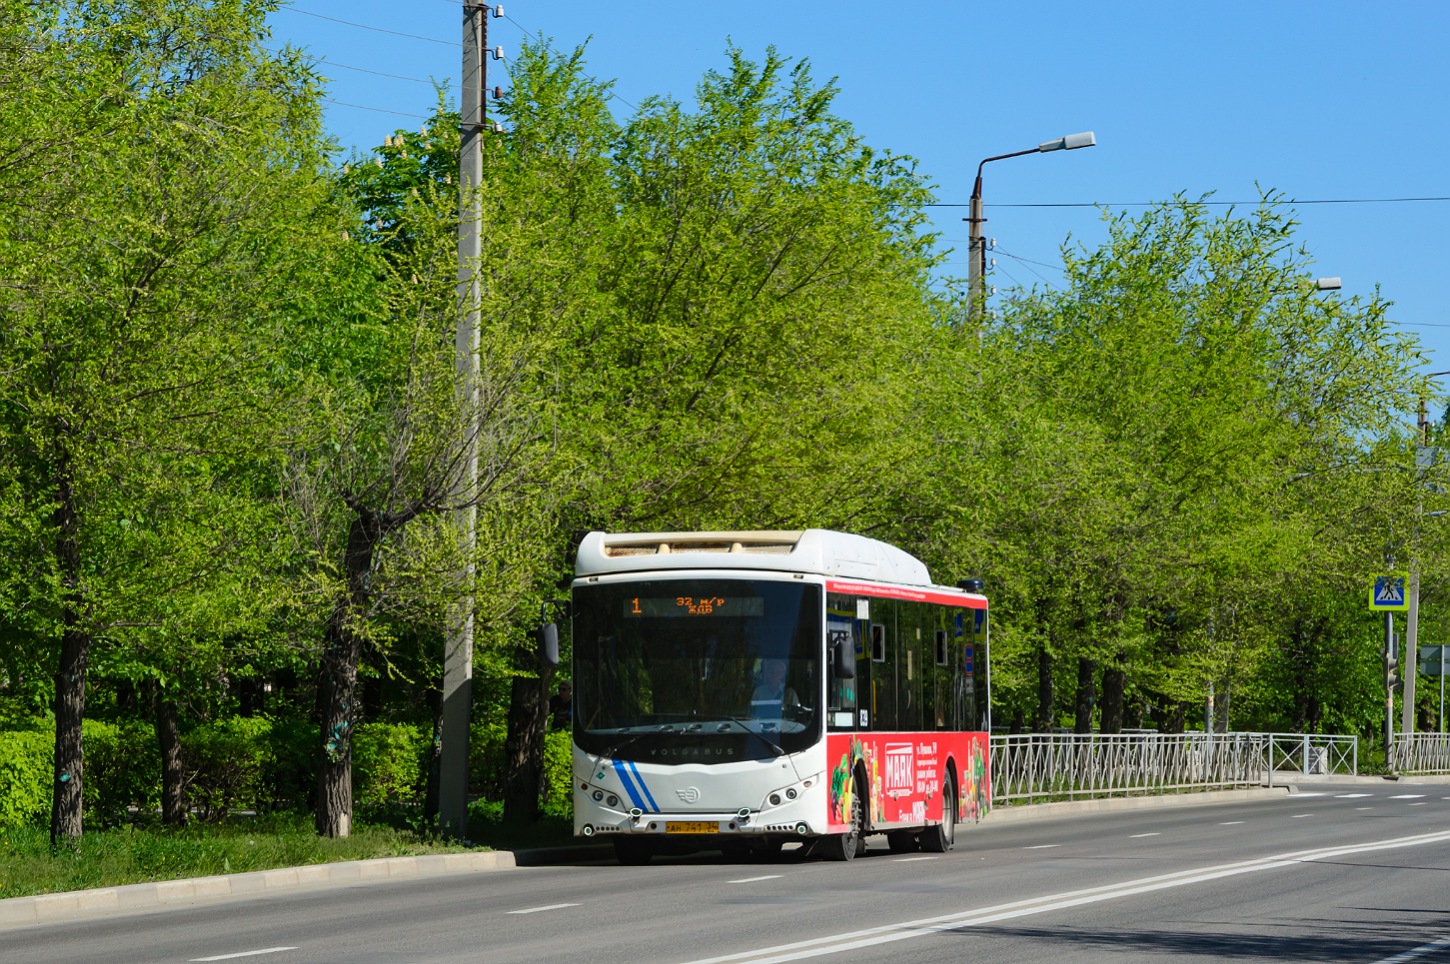 Volgogradská oblast, Volgabus-5270.GH č. 839